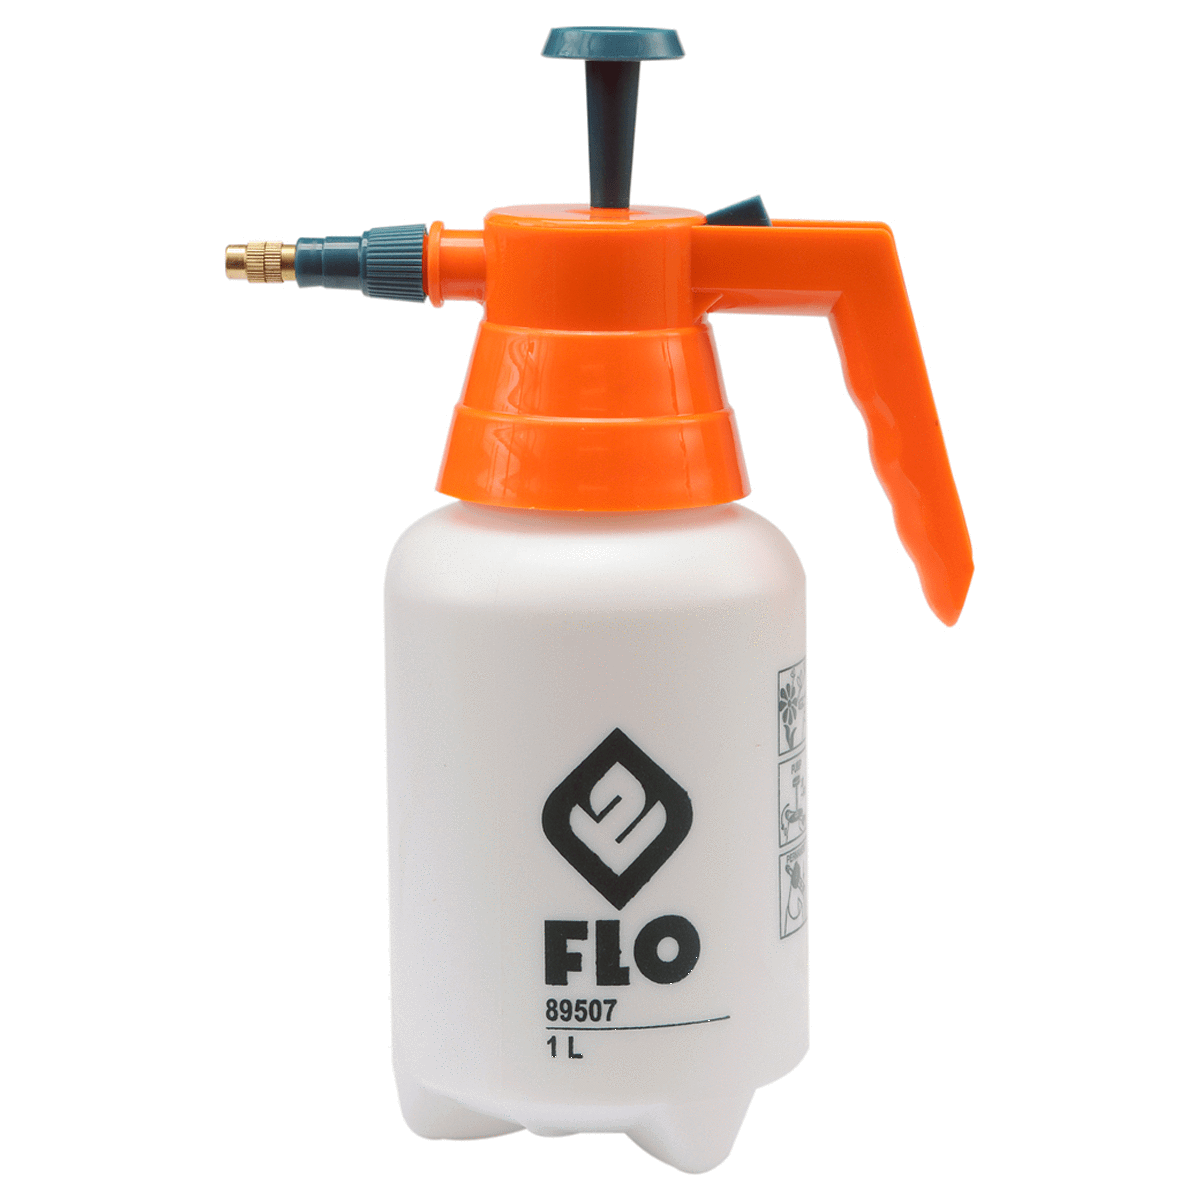 Pressure Sprayer 1L - FLO